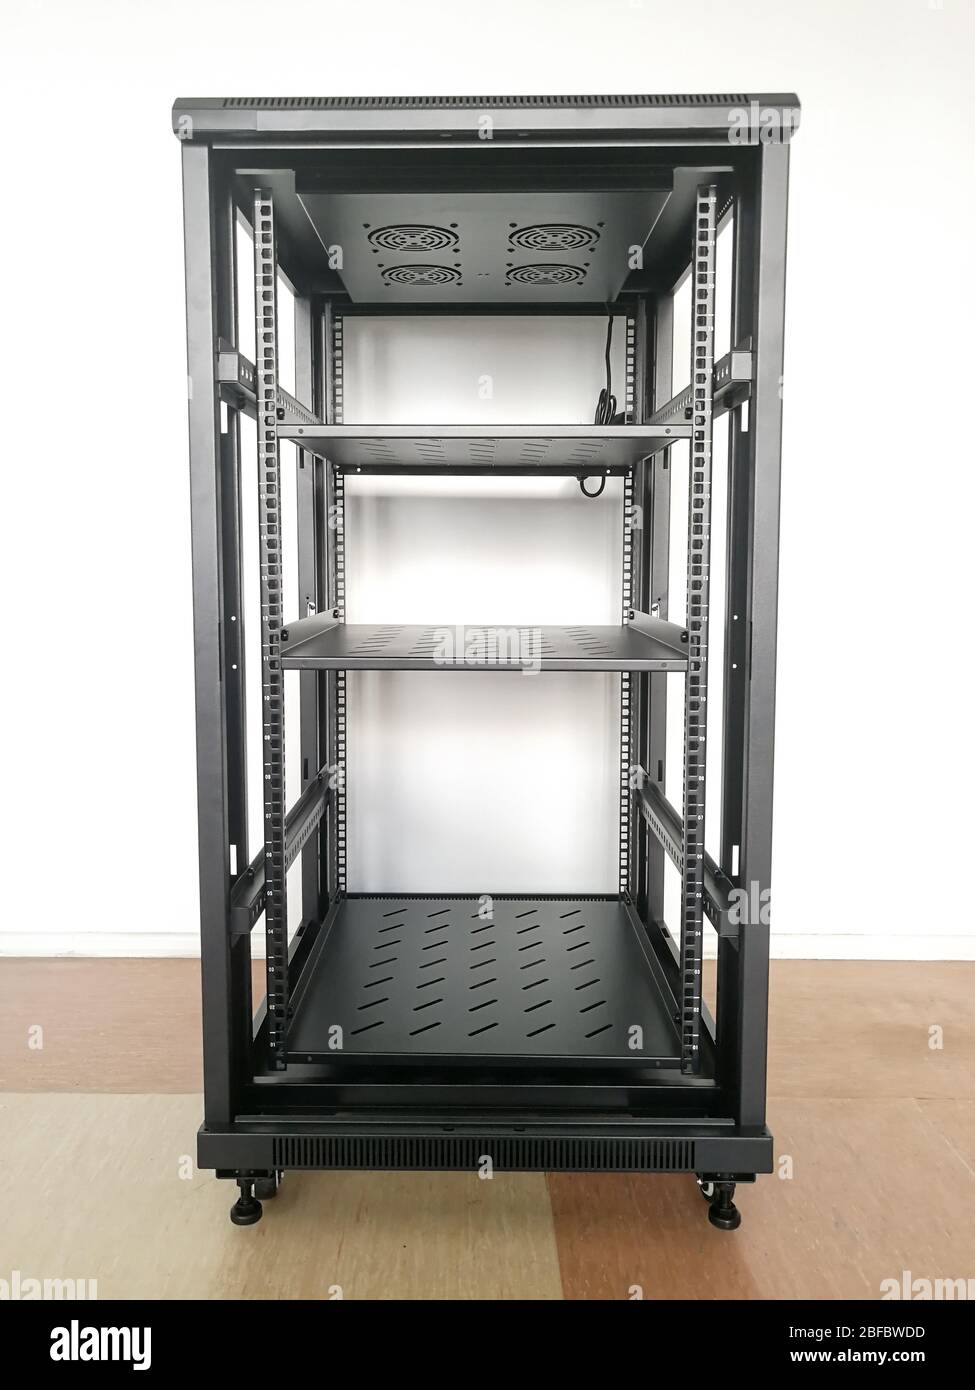 19-inch rack - Wikipedia